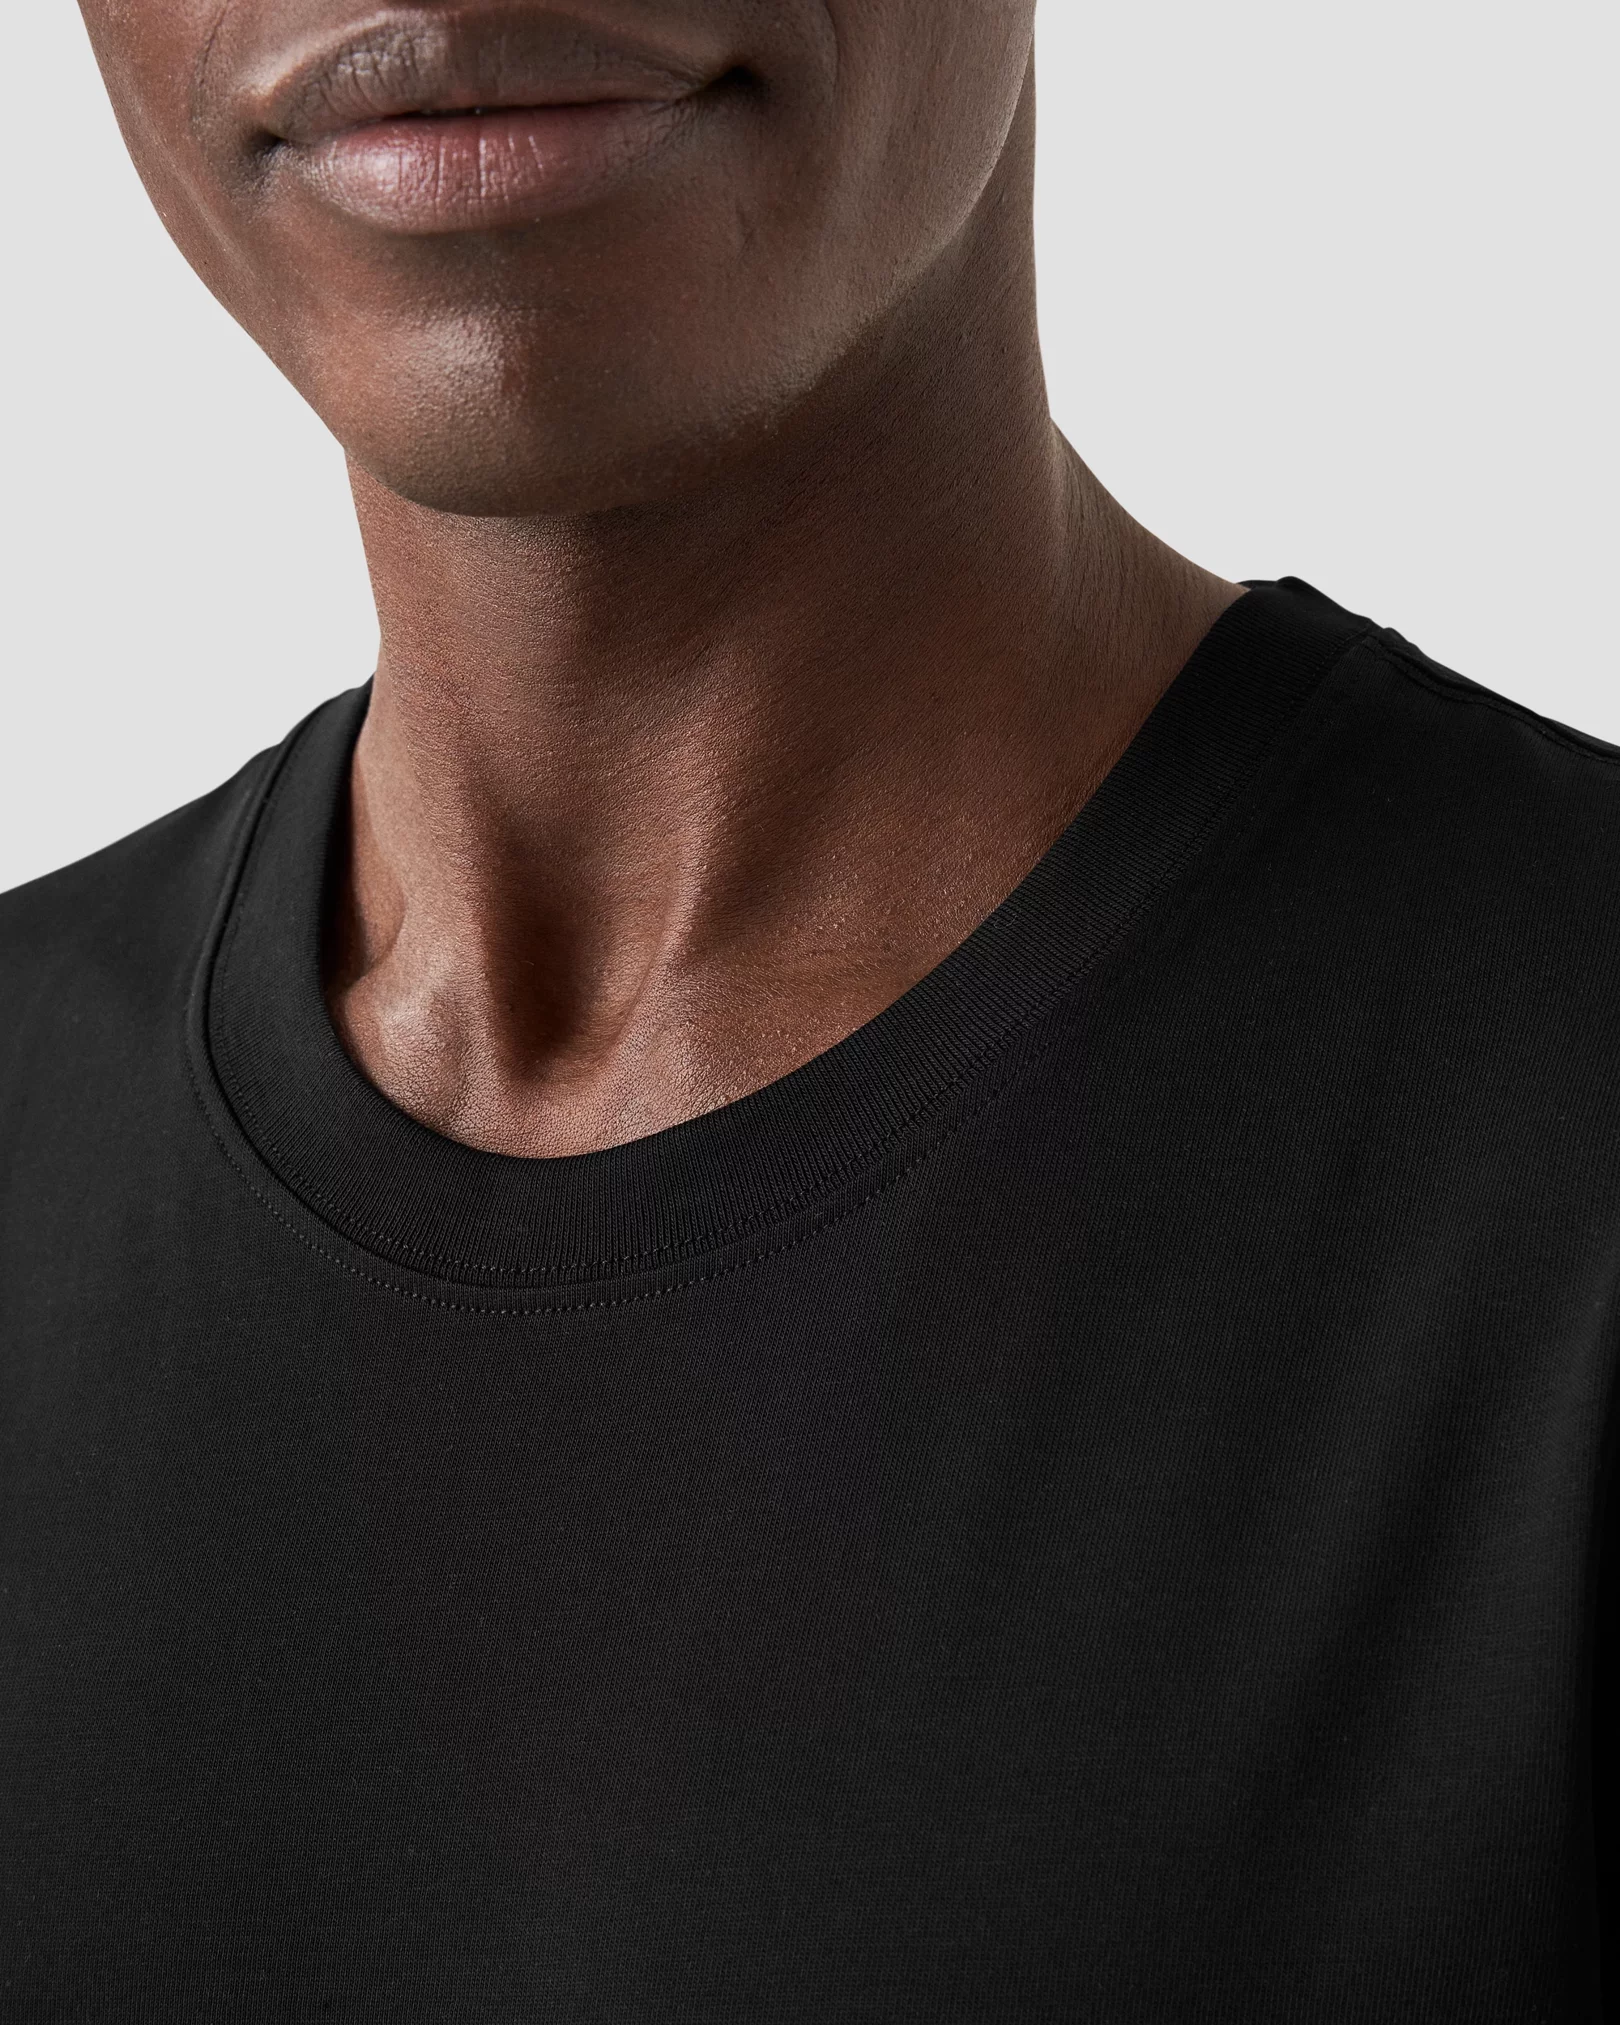 Eton - Black Supima Cotton T-Shirt